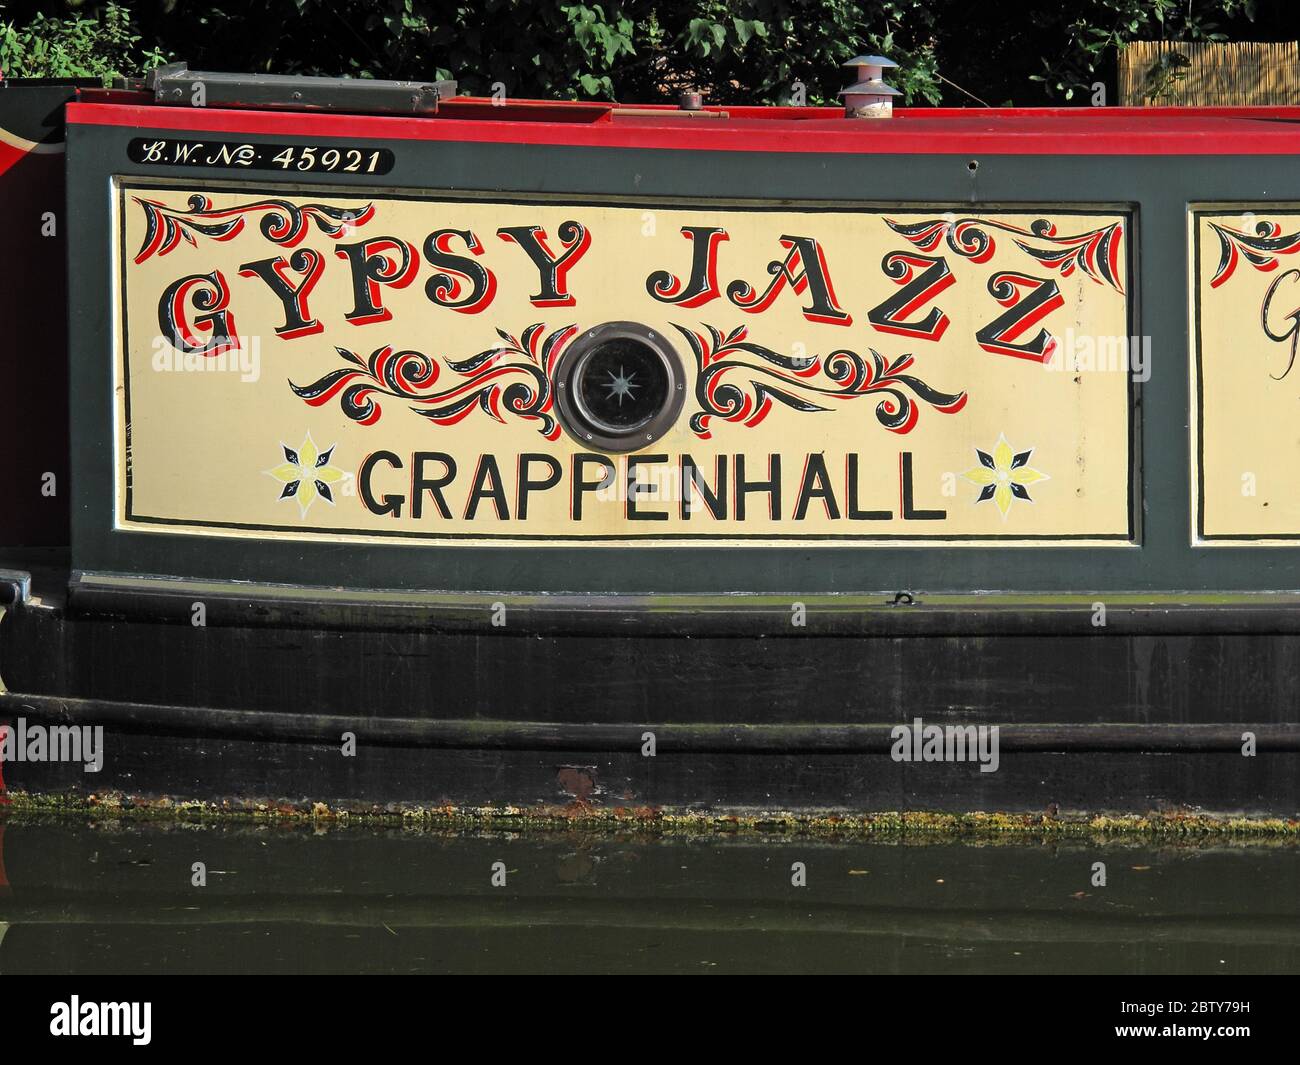 Gypsy jazz Grappenhall,Bridgewater Canal, Grappenhall, Warrington, Cheshire, North west,England, England, UK, 45921 Stock Photo